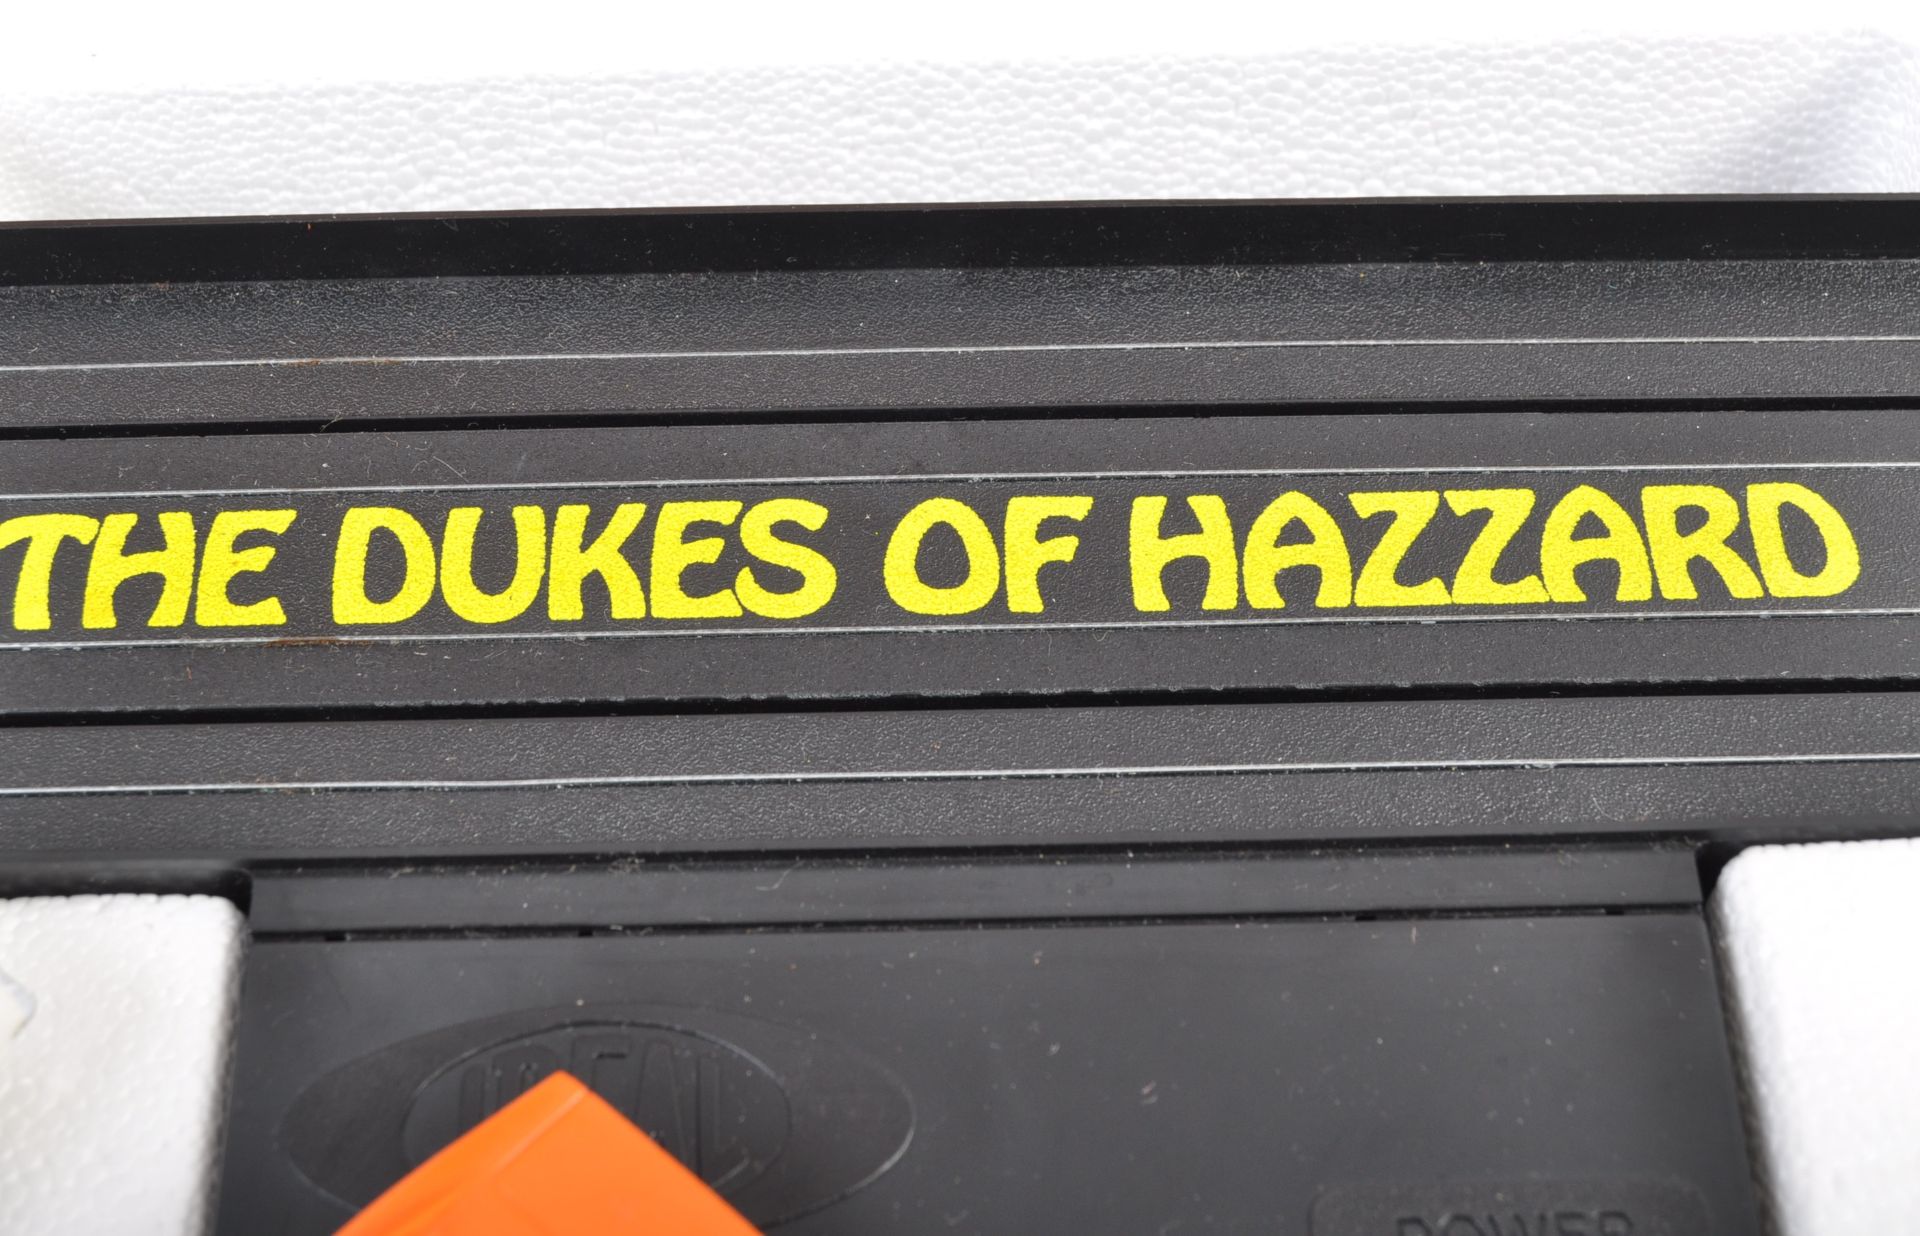 ORIGINAL VINTAGE DUKES OF HAZZARD ELECTRIC SLOT RACING SET - Image 4 of 4